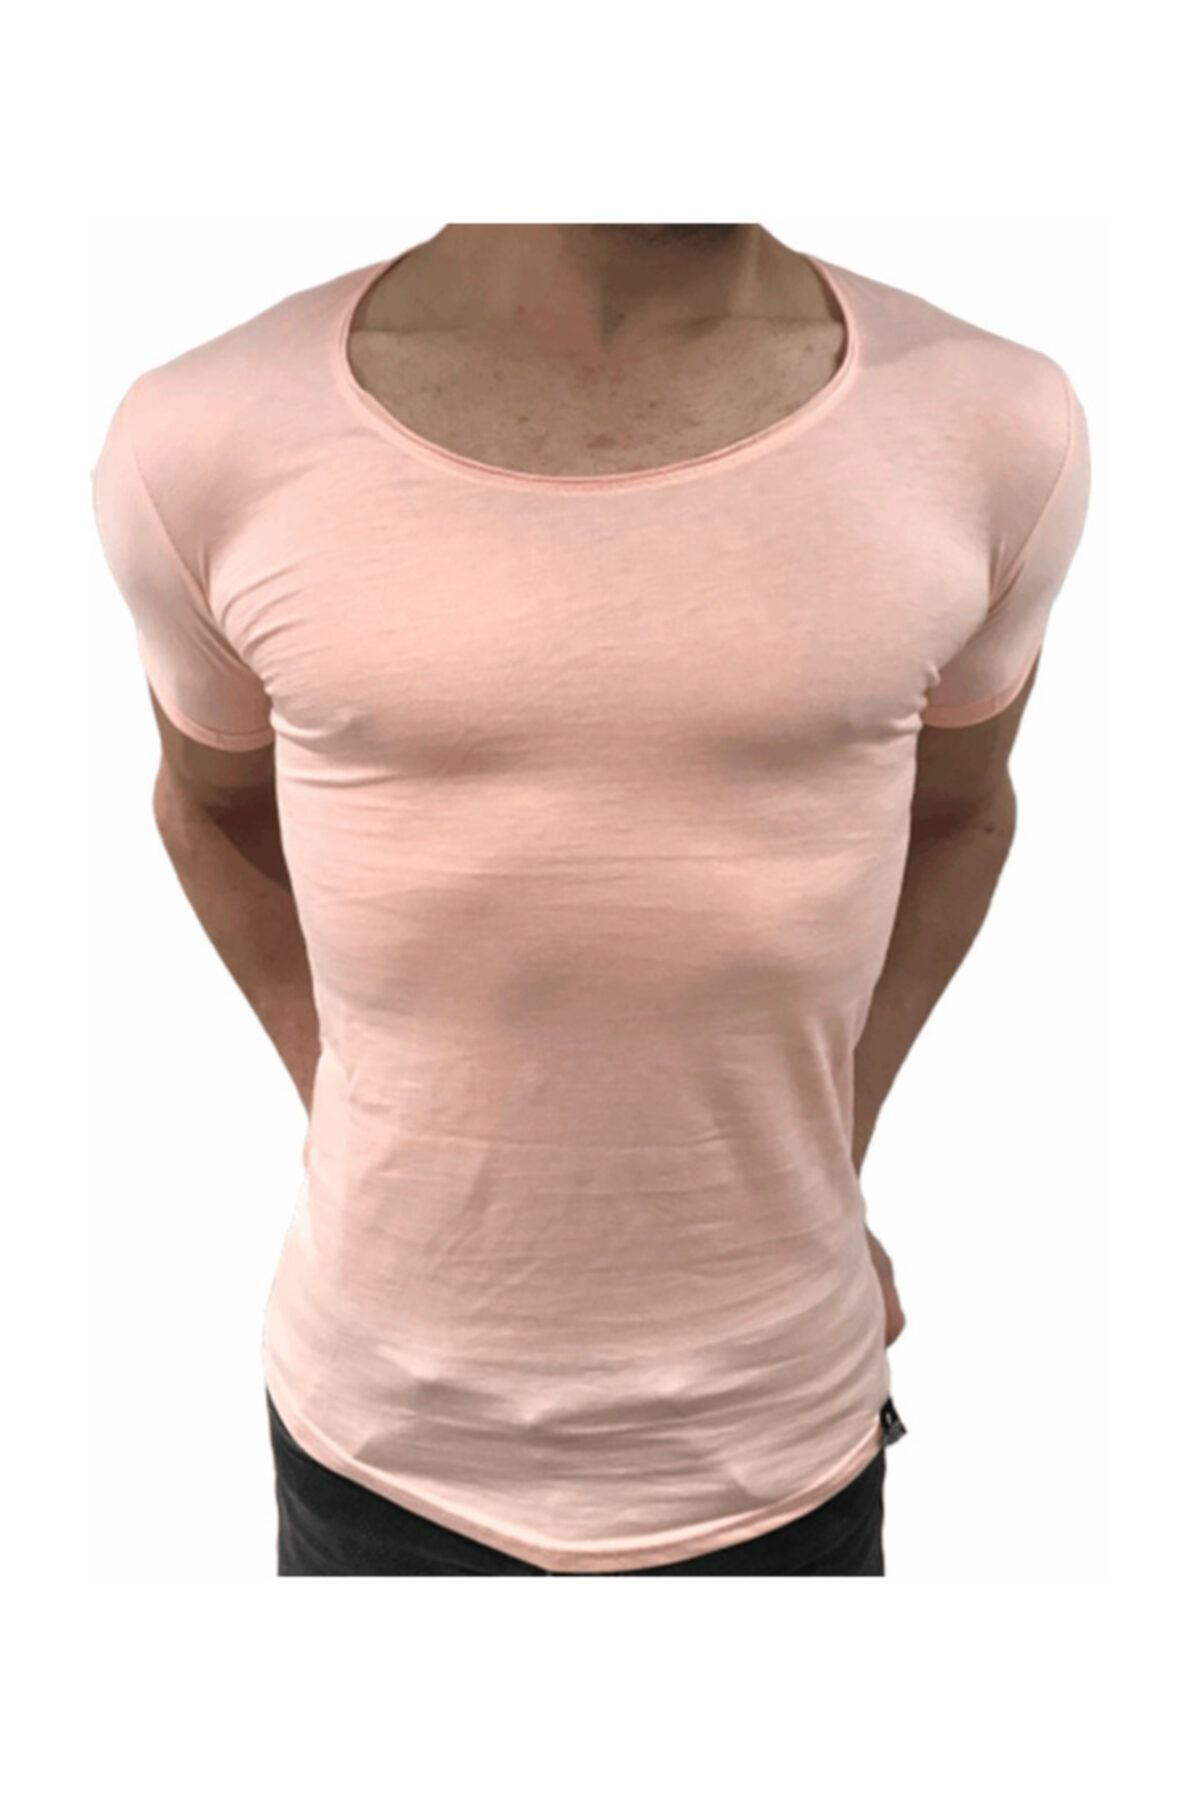 BYBÜLENT Erkek Oval Yaka Tişört Açık Yaka Likralı Slim Fit T-shirt Pembe Vr041